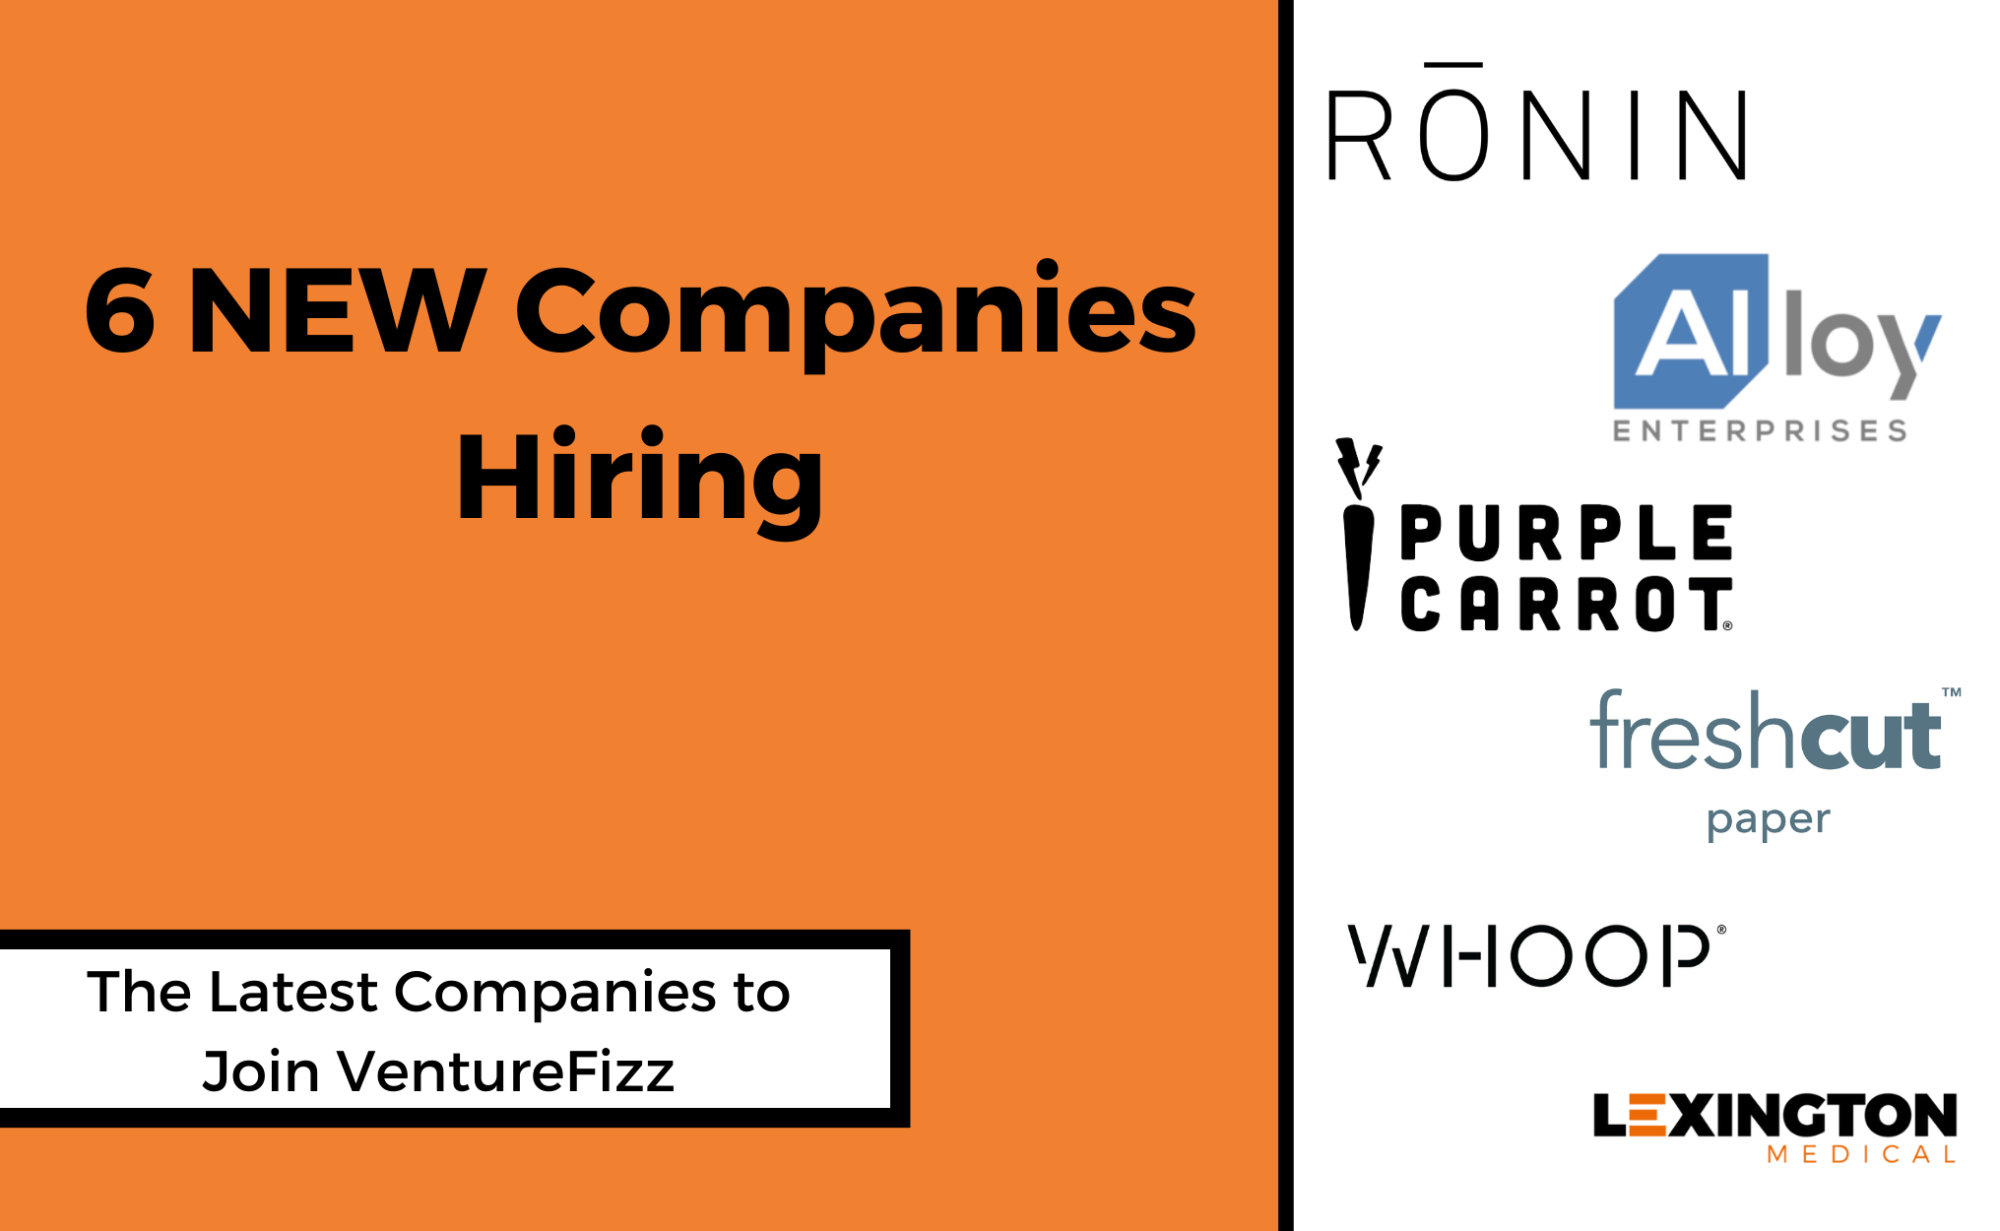 The Latest Companies Hiring on VentureFizz banner image